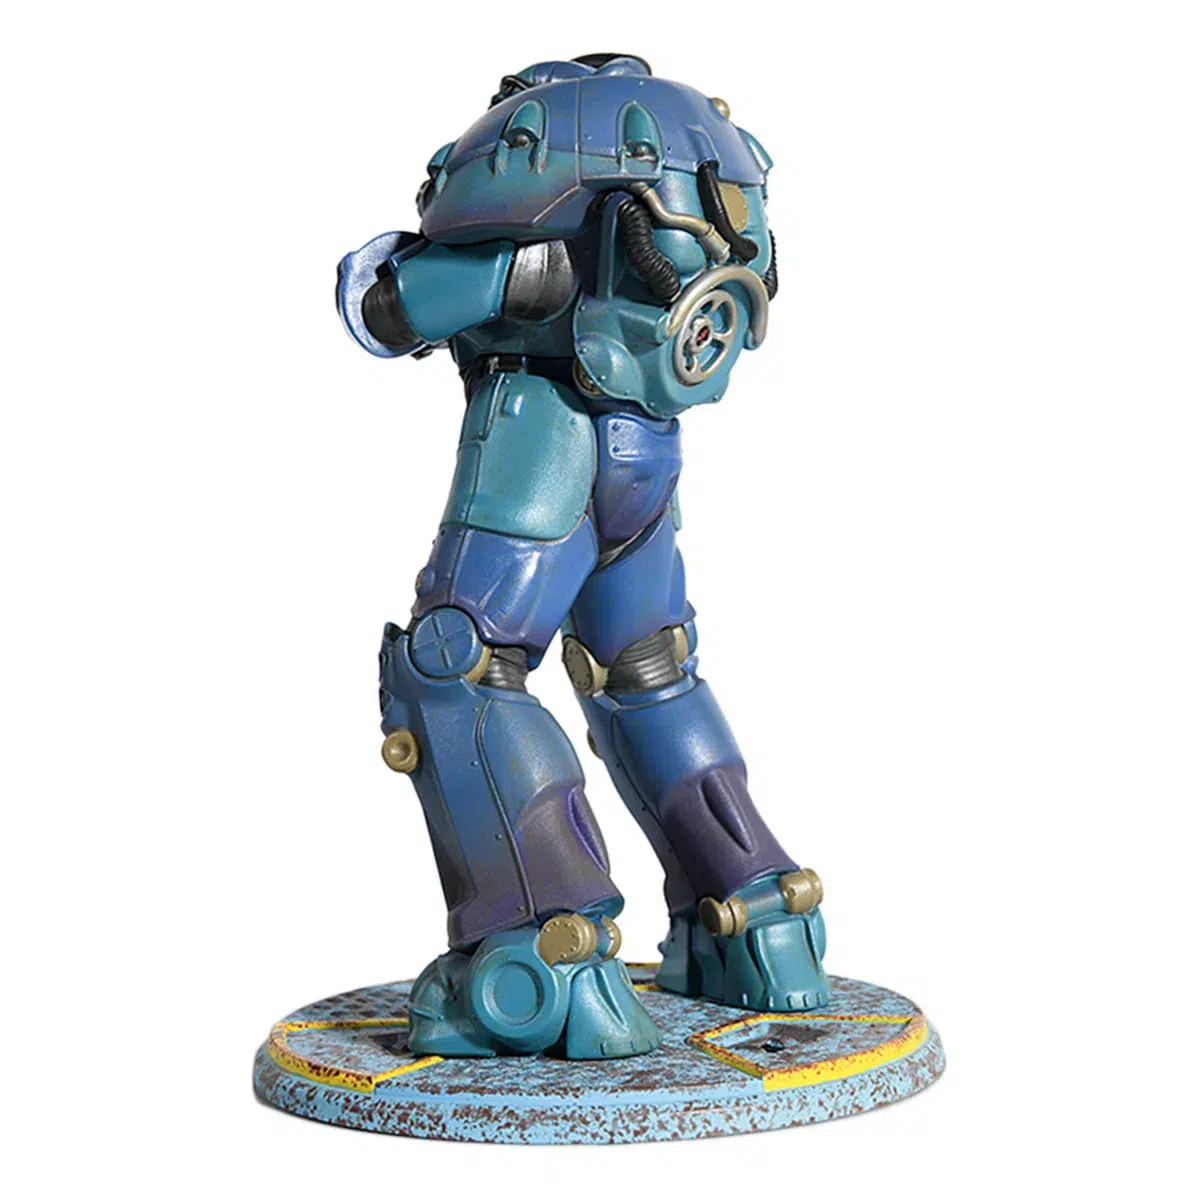 Fallout Power Armor Statue "Nuka Cola Quantum" Image 7